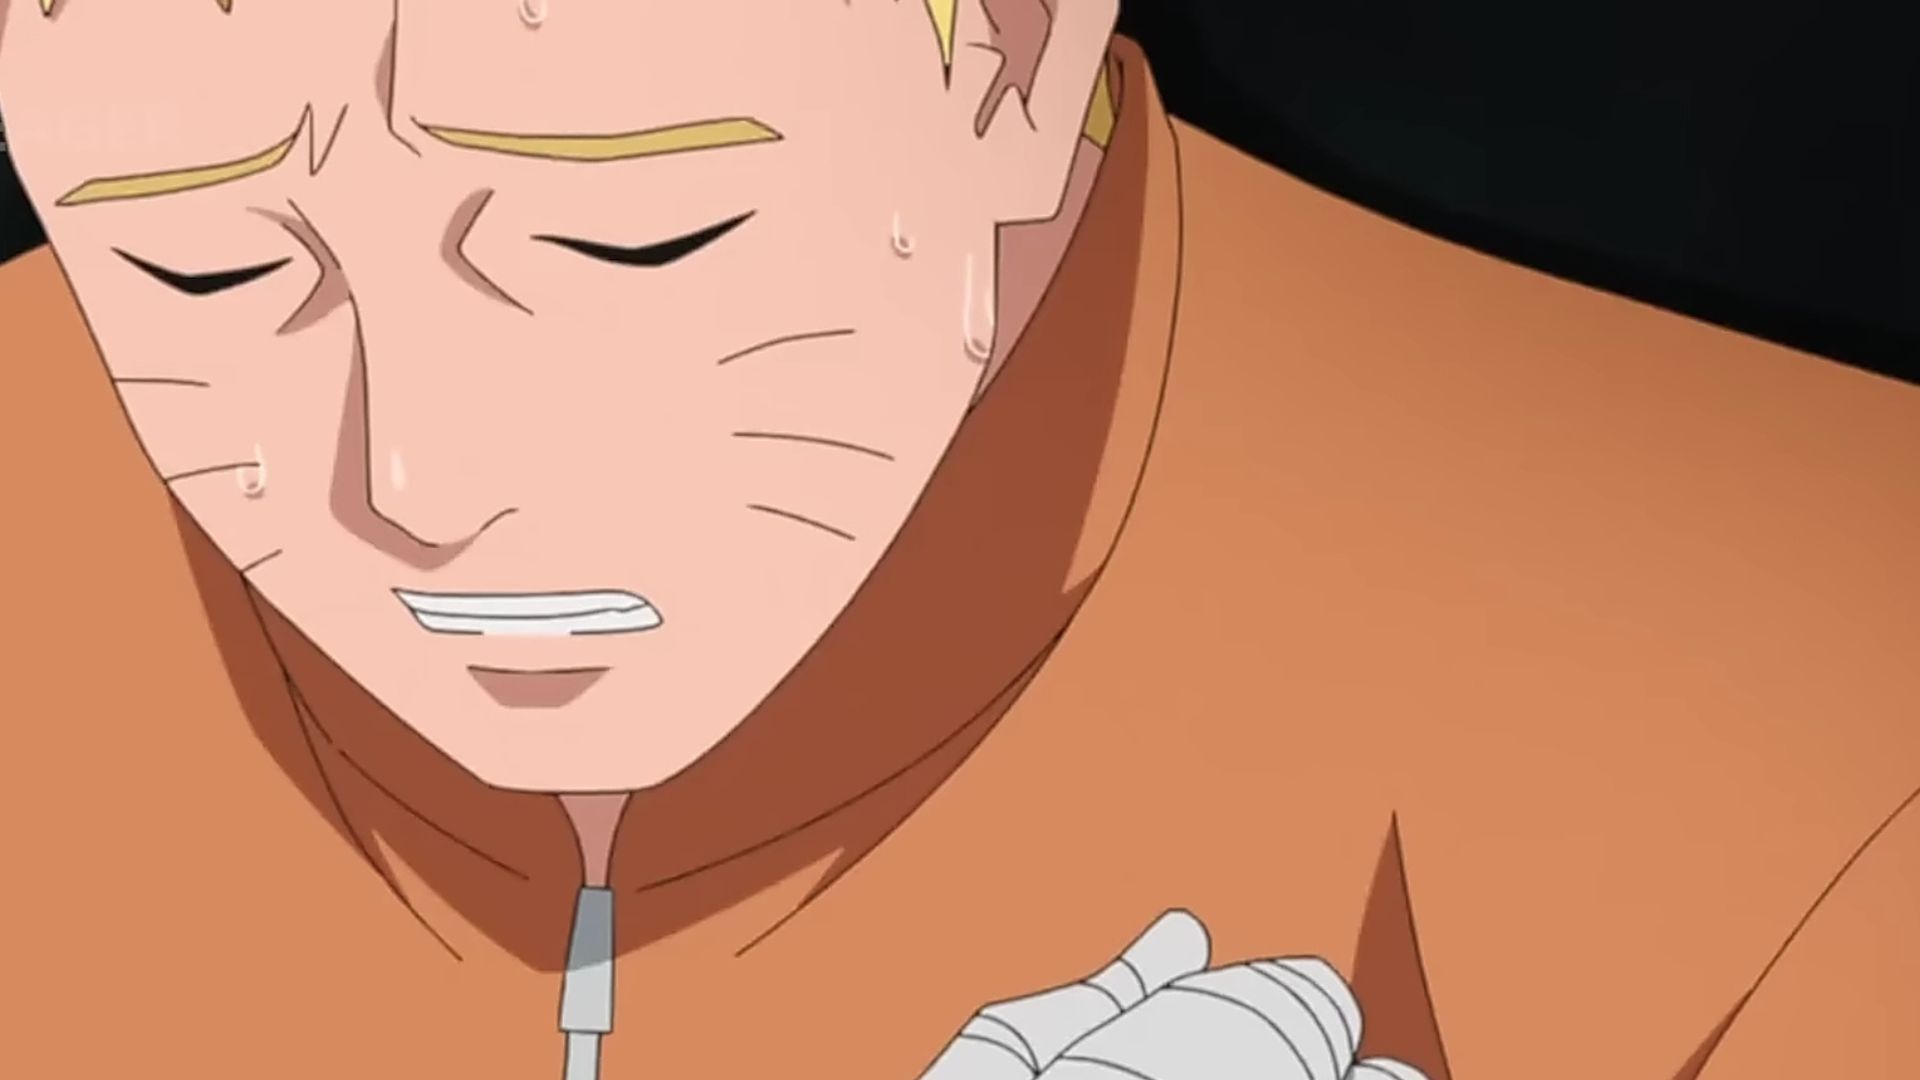 Naruto as seen in Boruto anime (Image via Studio Pierrot)